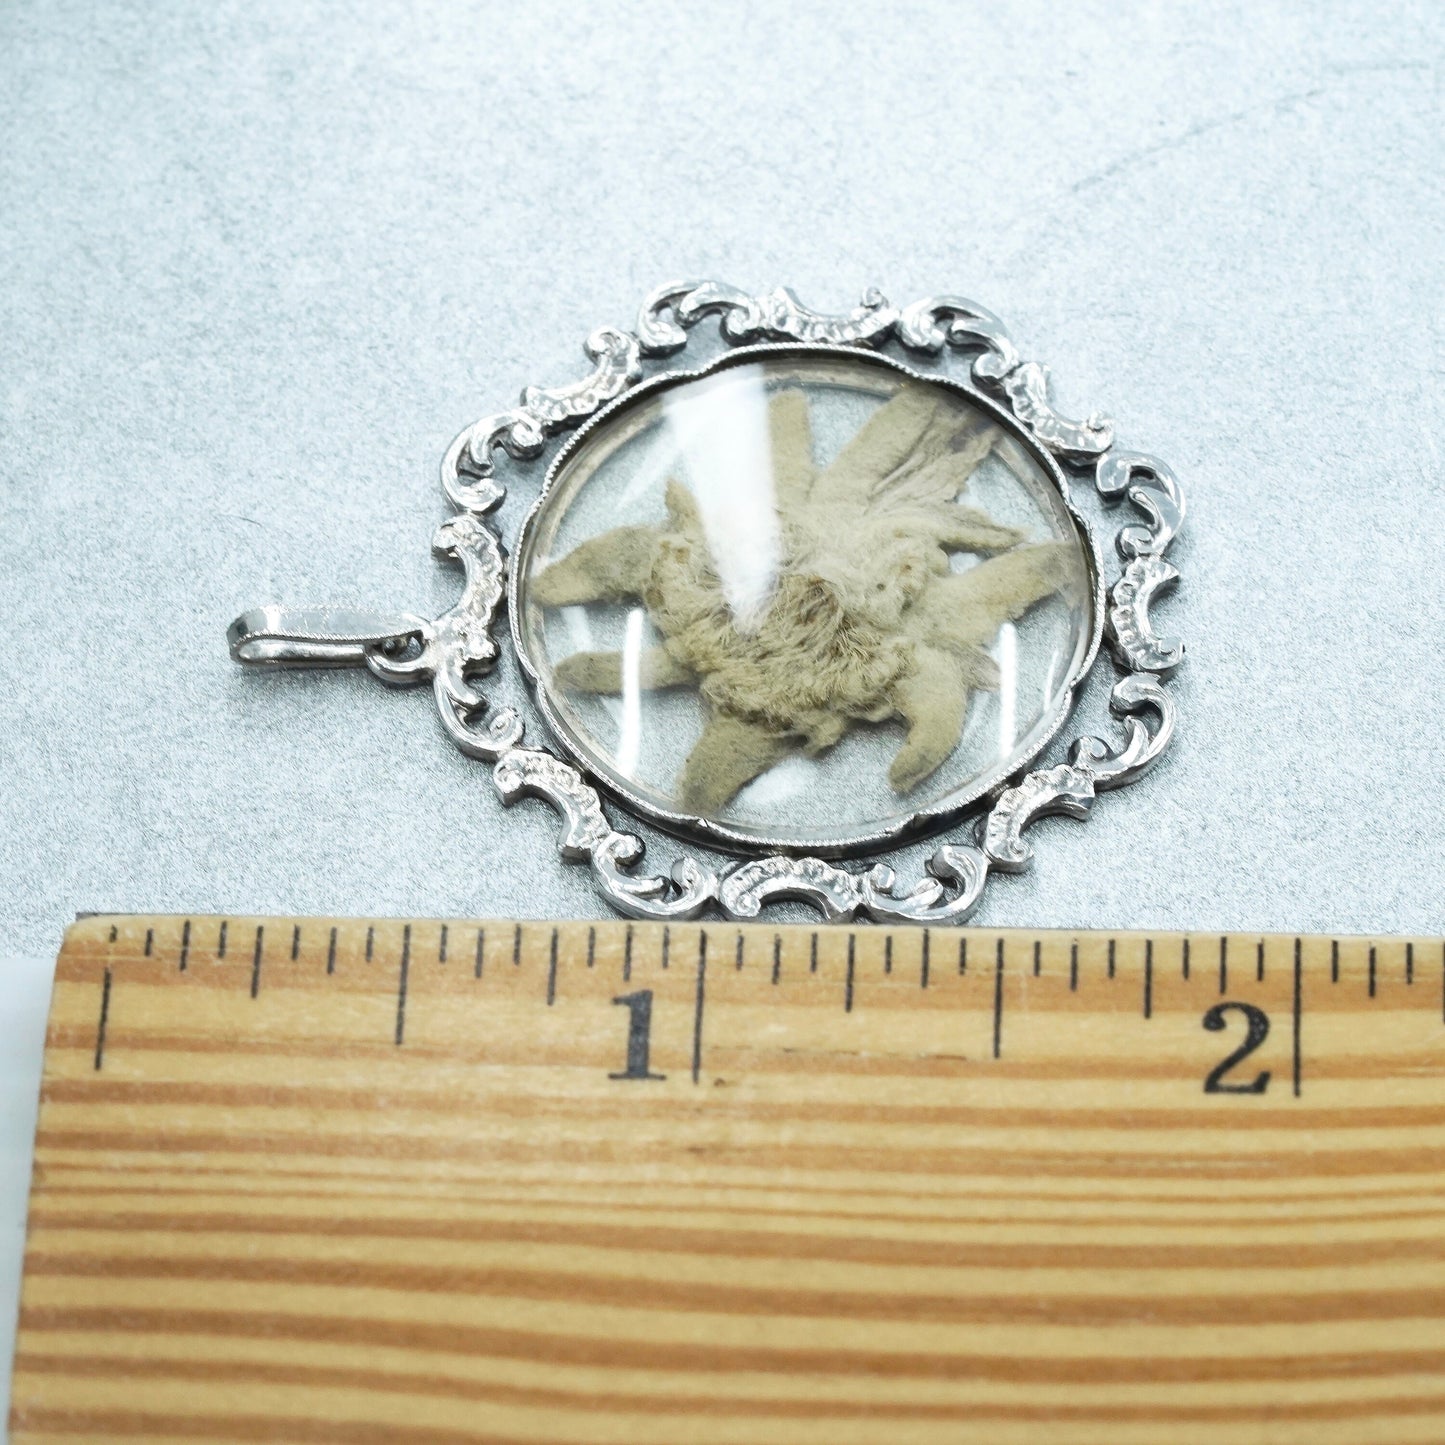 Vintage sterling silver handmade 925 flower pendant